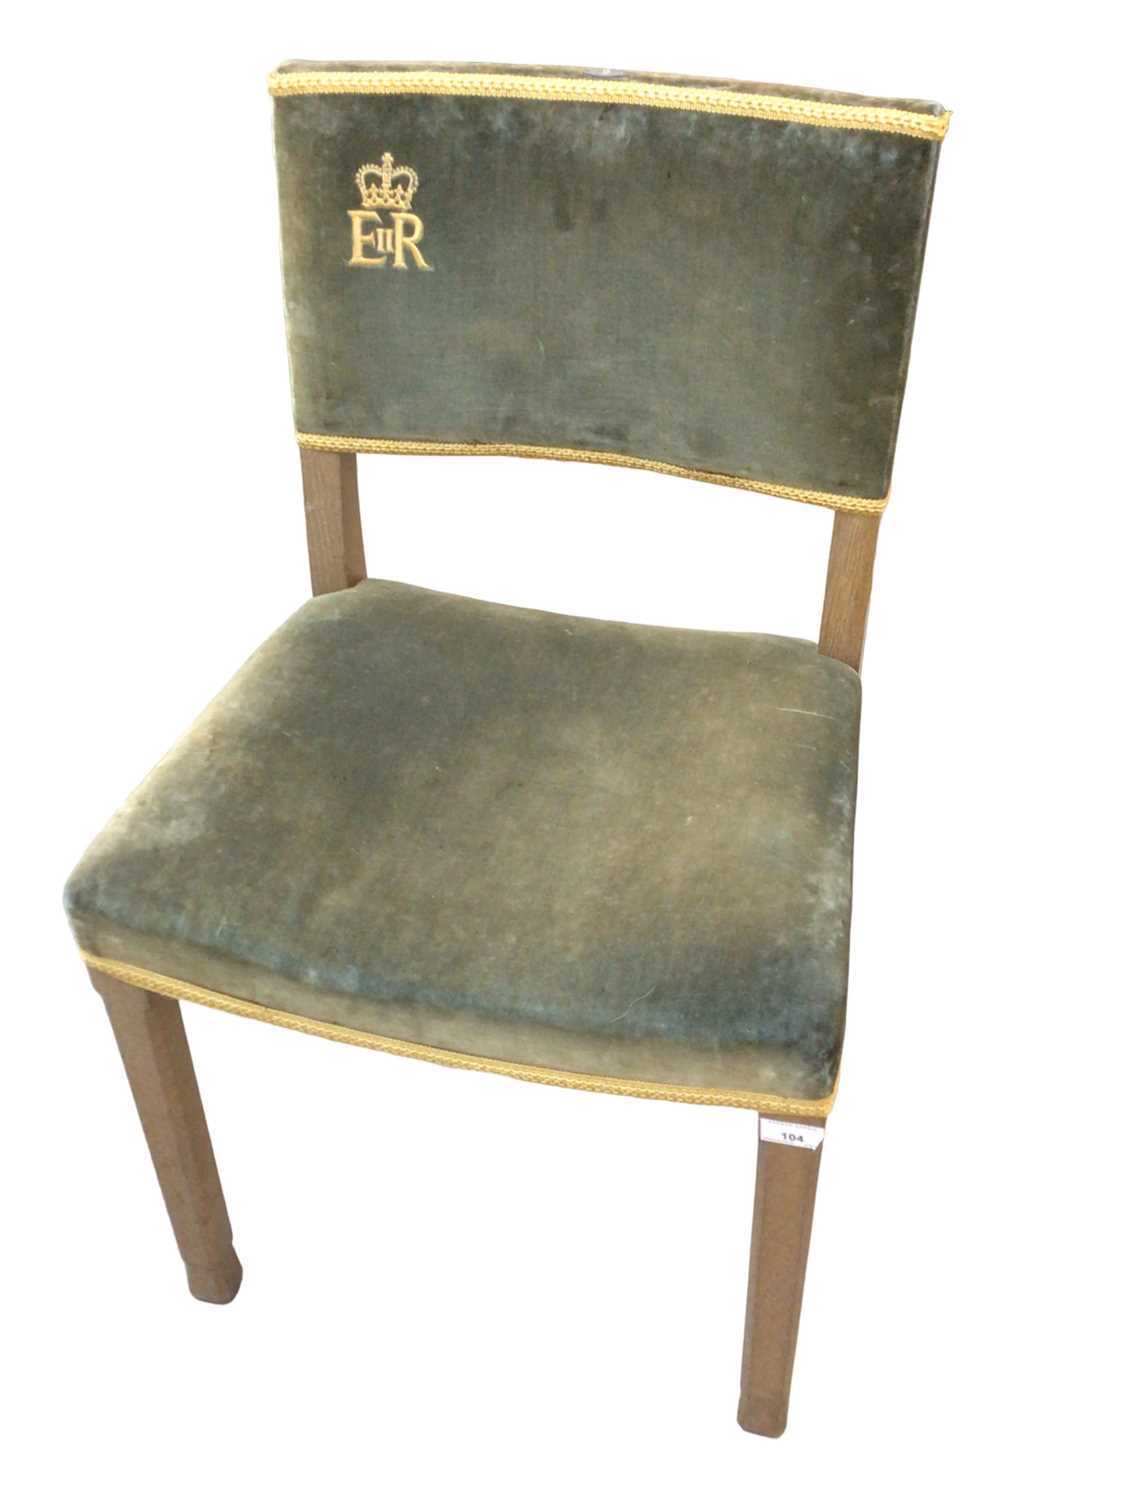 Lot 104 - H.M. Queen Elizabeth II Coronation chair 1953